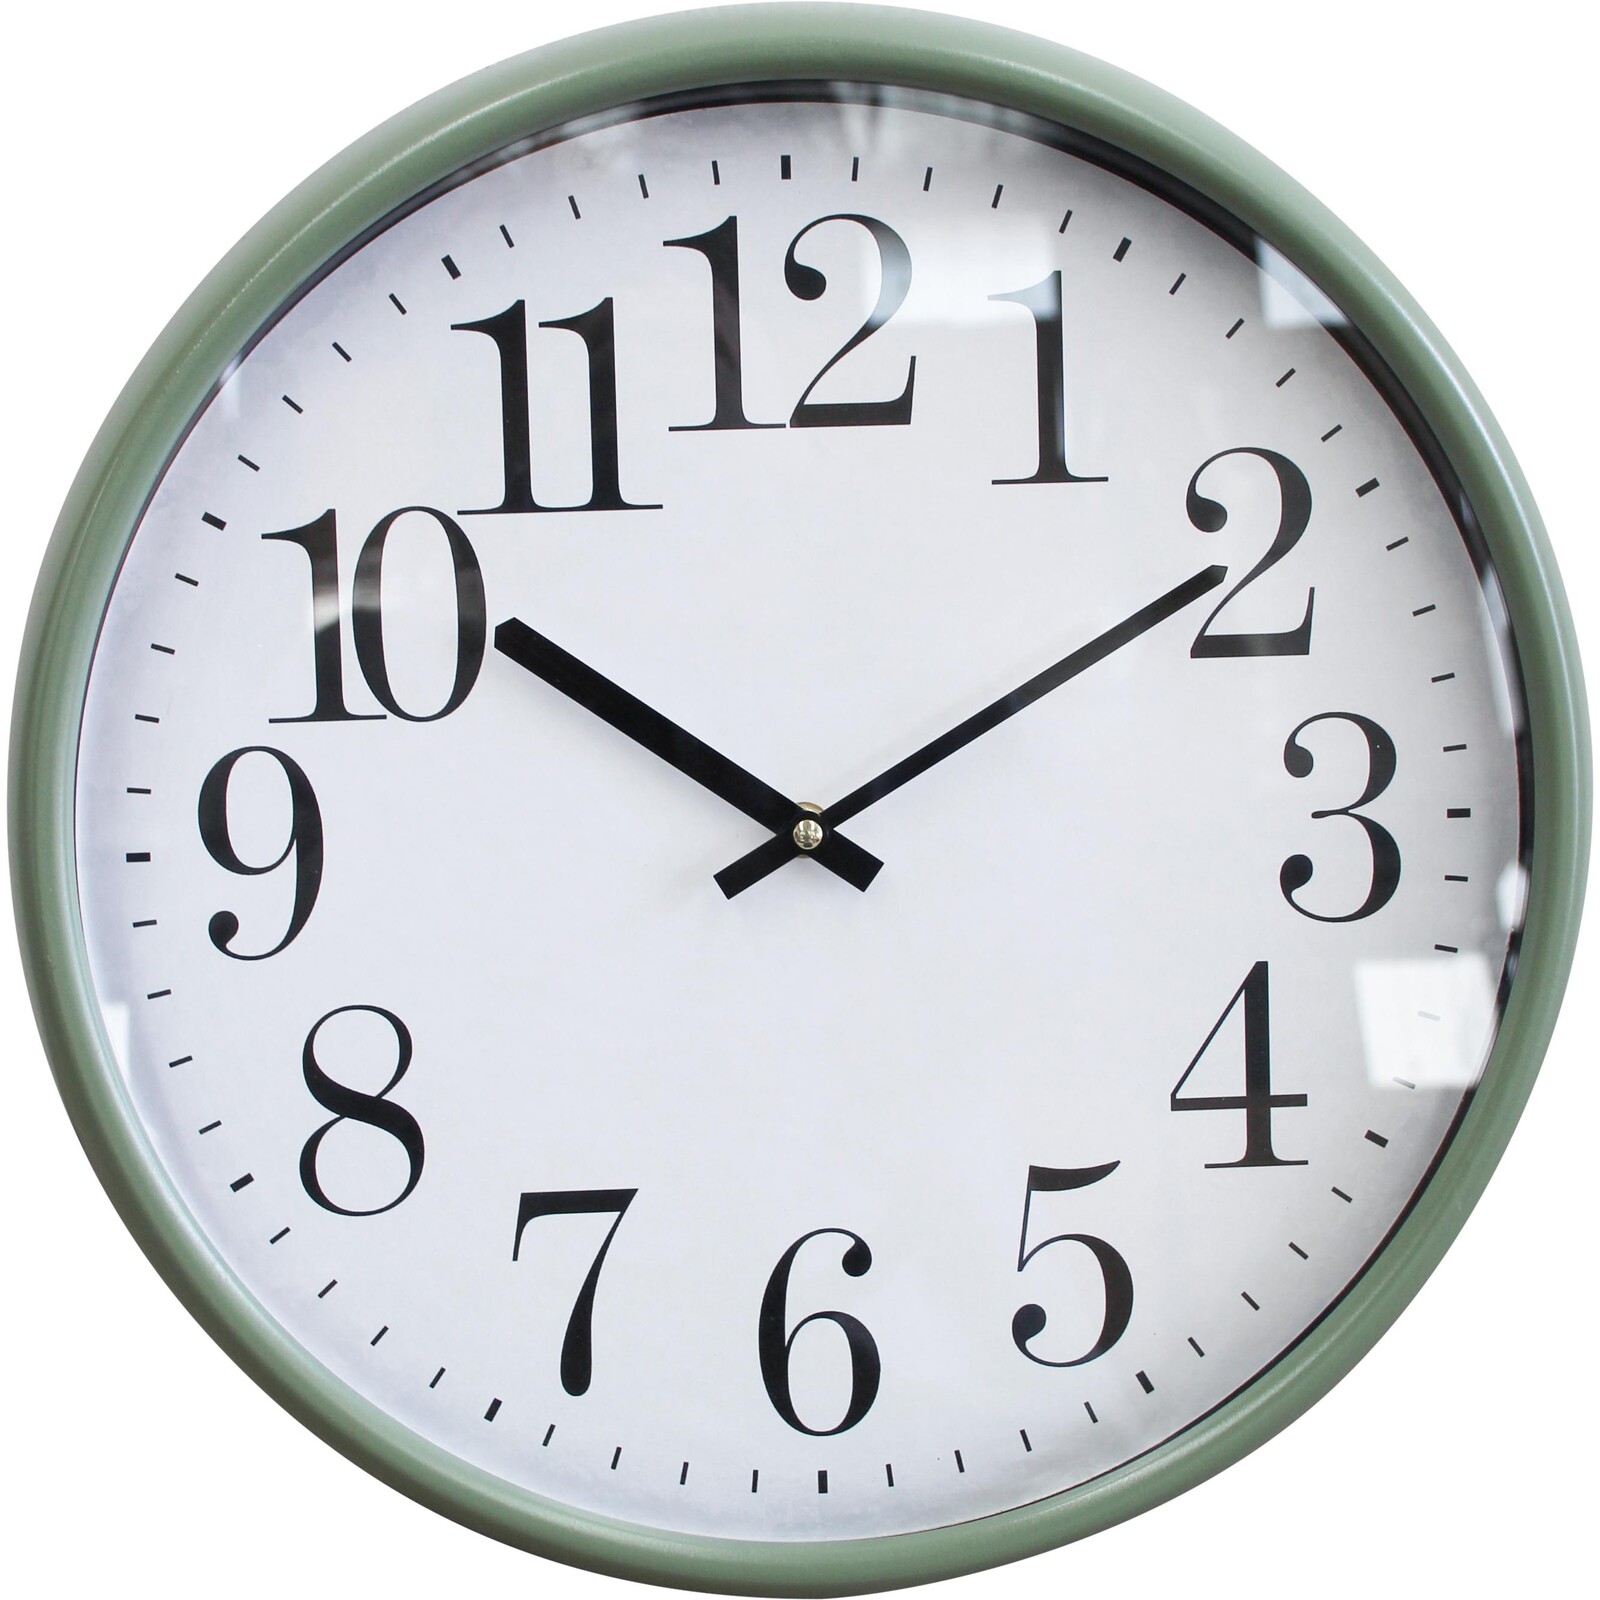 Clock Misty Moss  40cm